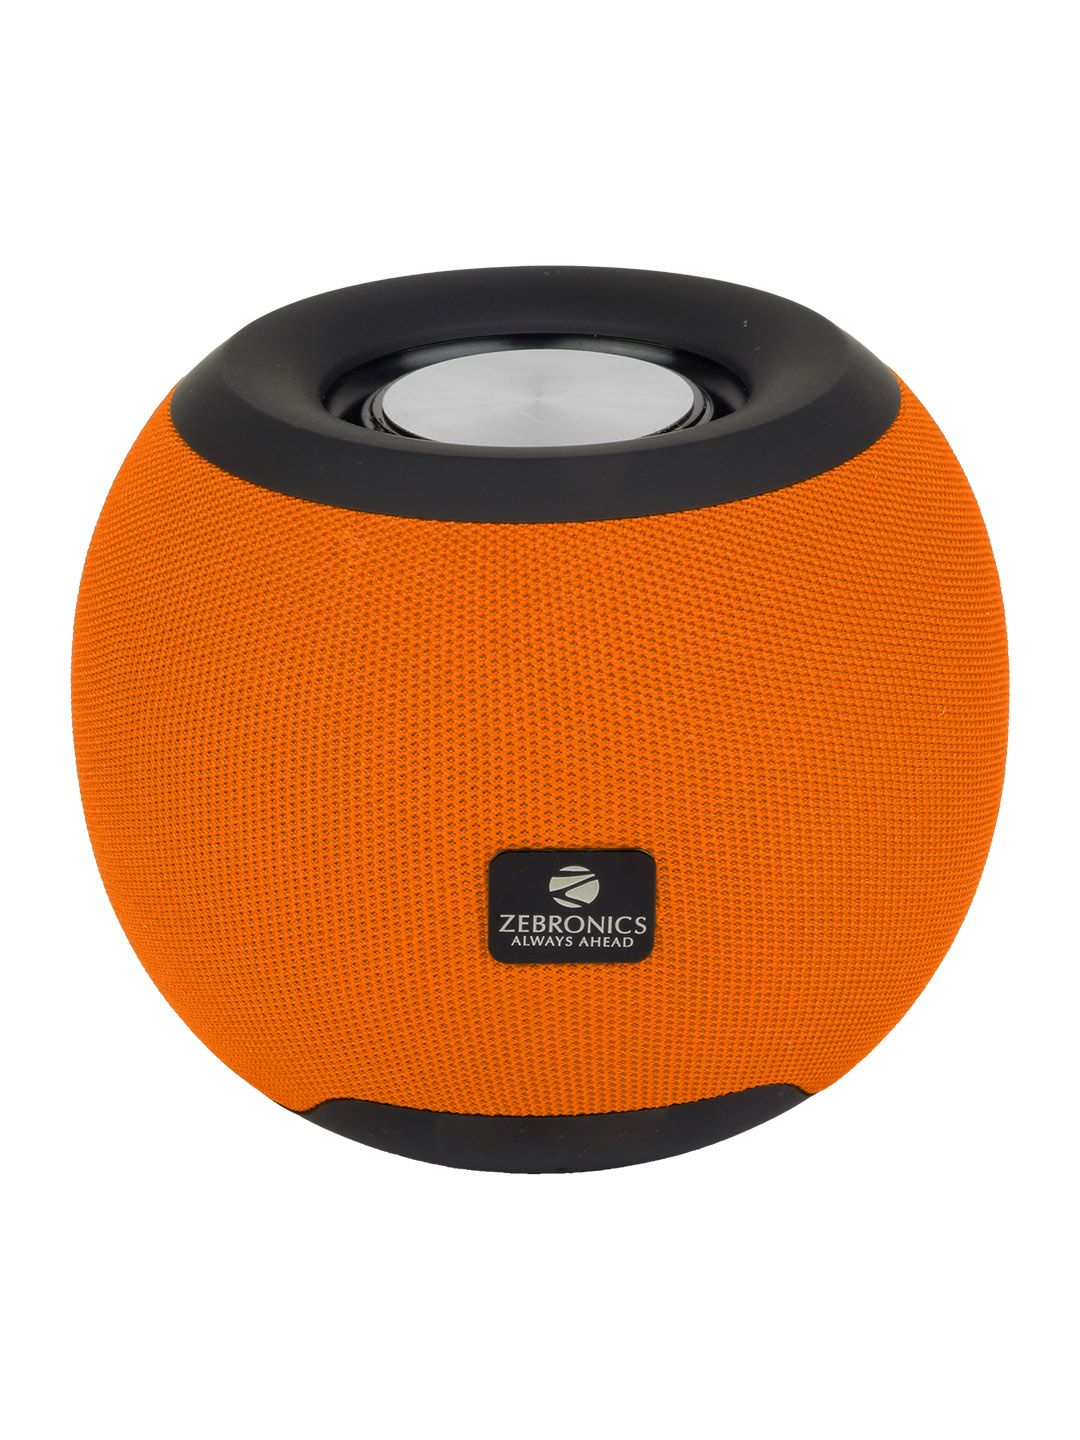 ZEBRONICS ZEB-BELLOW 40 Wireless Bluetooth 8W Portable Speaker - Orange Price in India